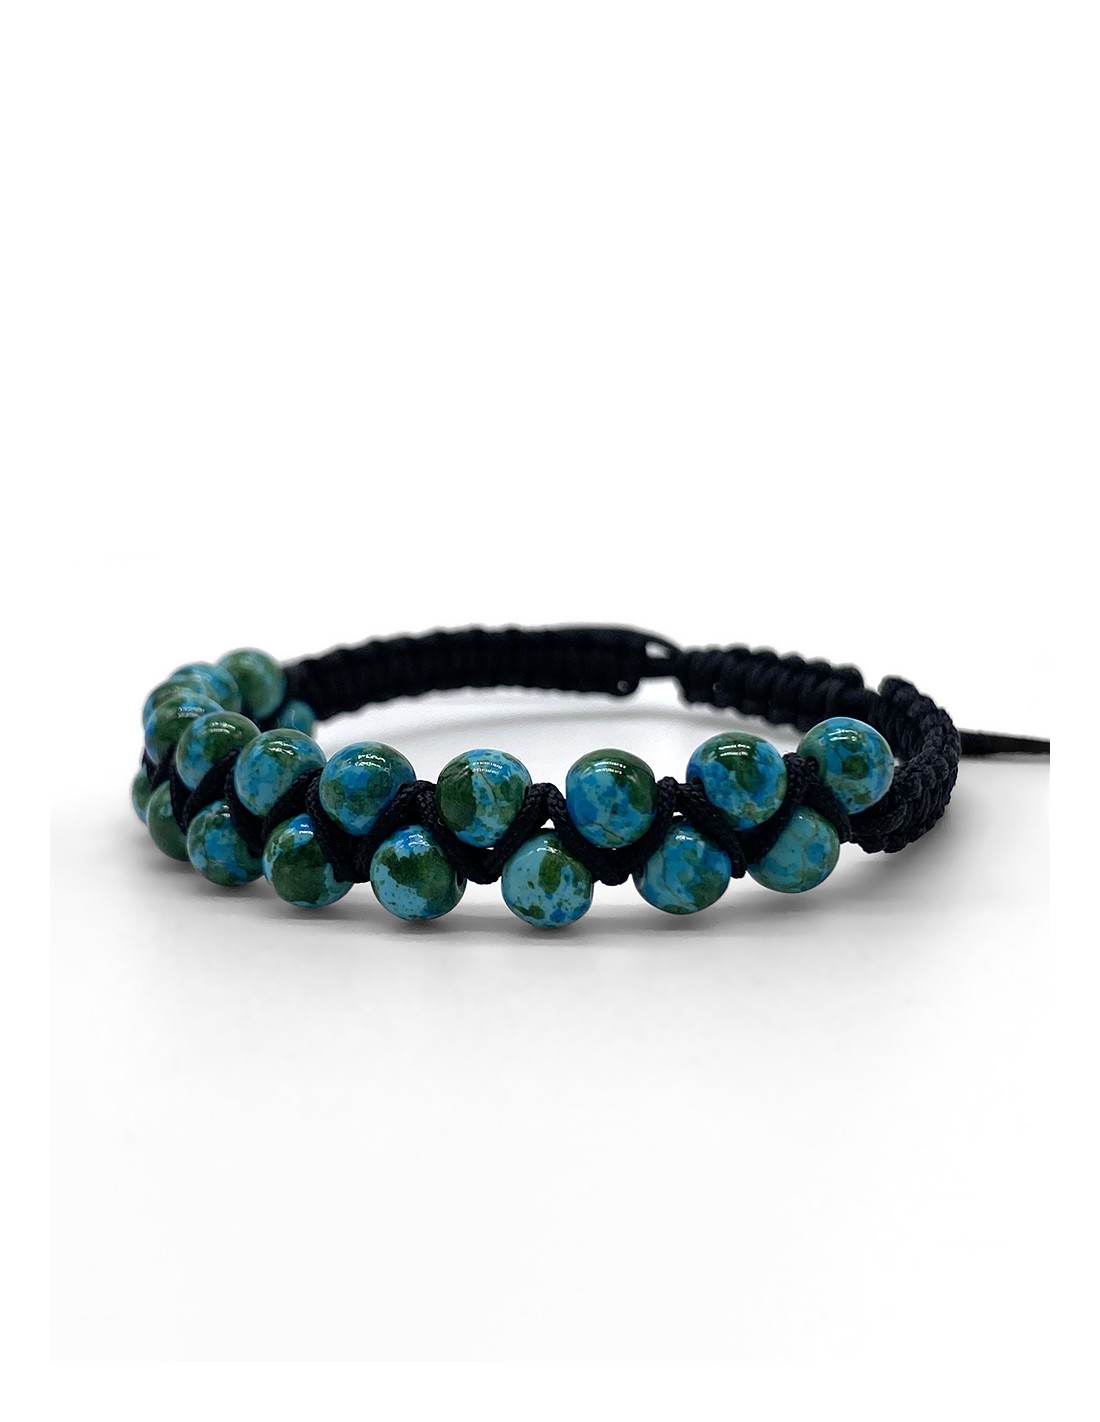 Zosimi Beads - Zig Zag Bracelet - Green and Turquoise Howlite